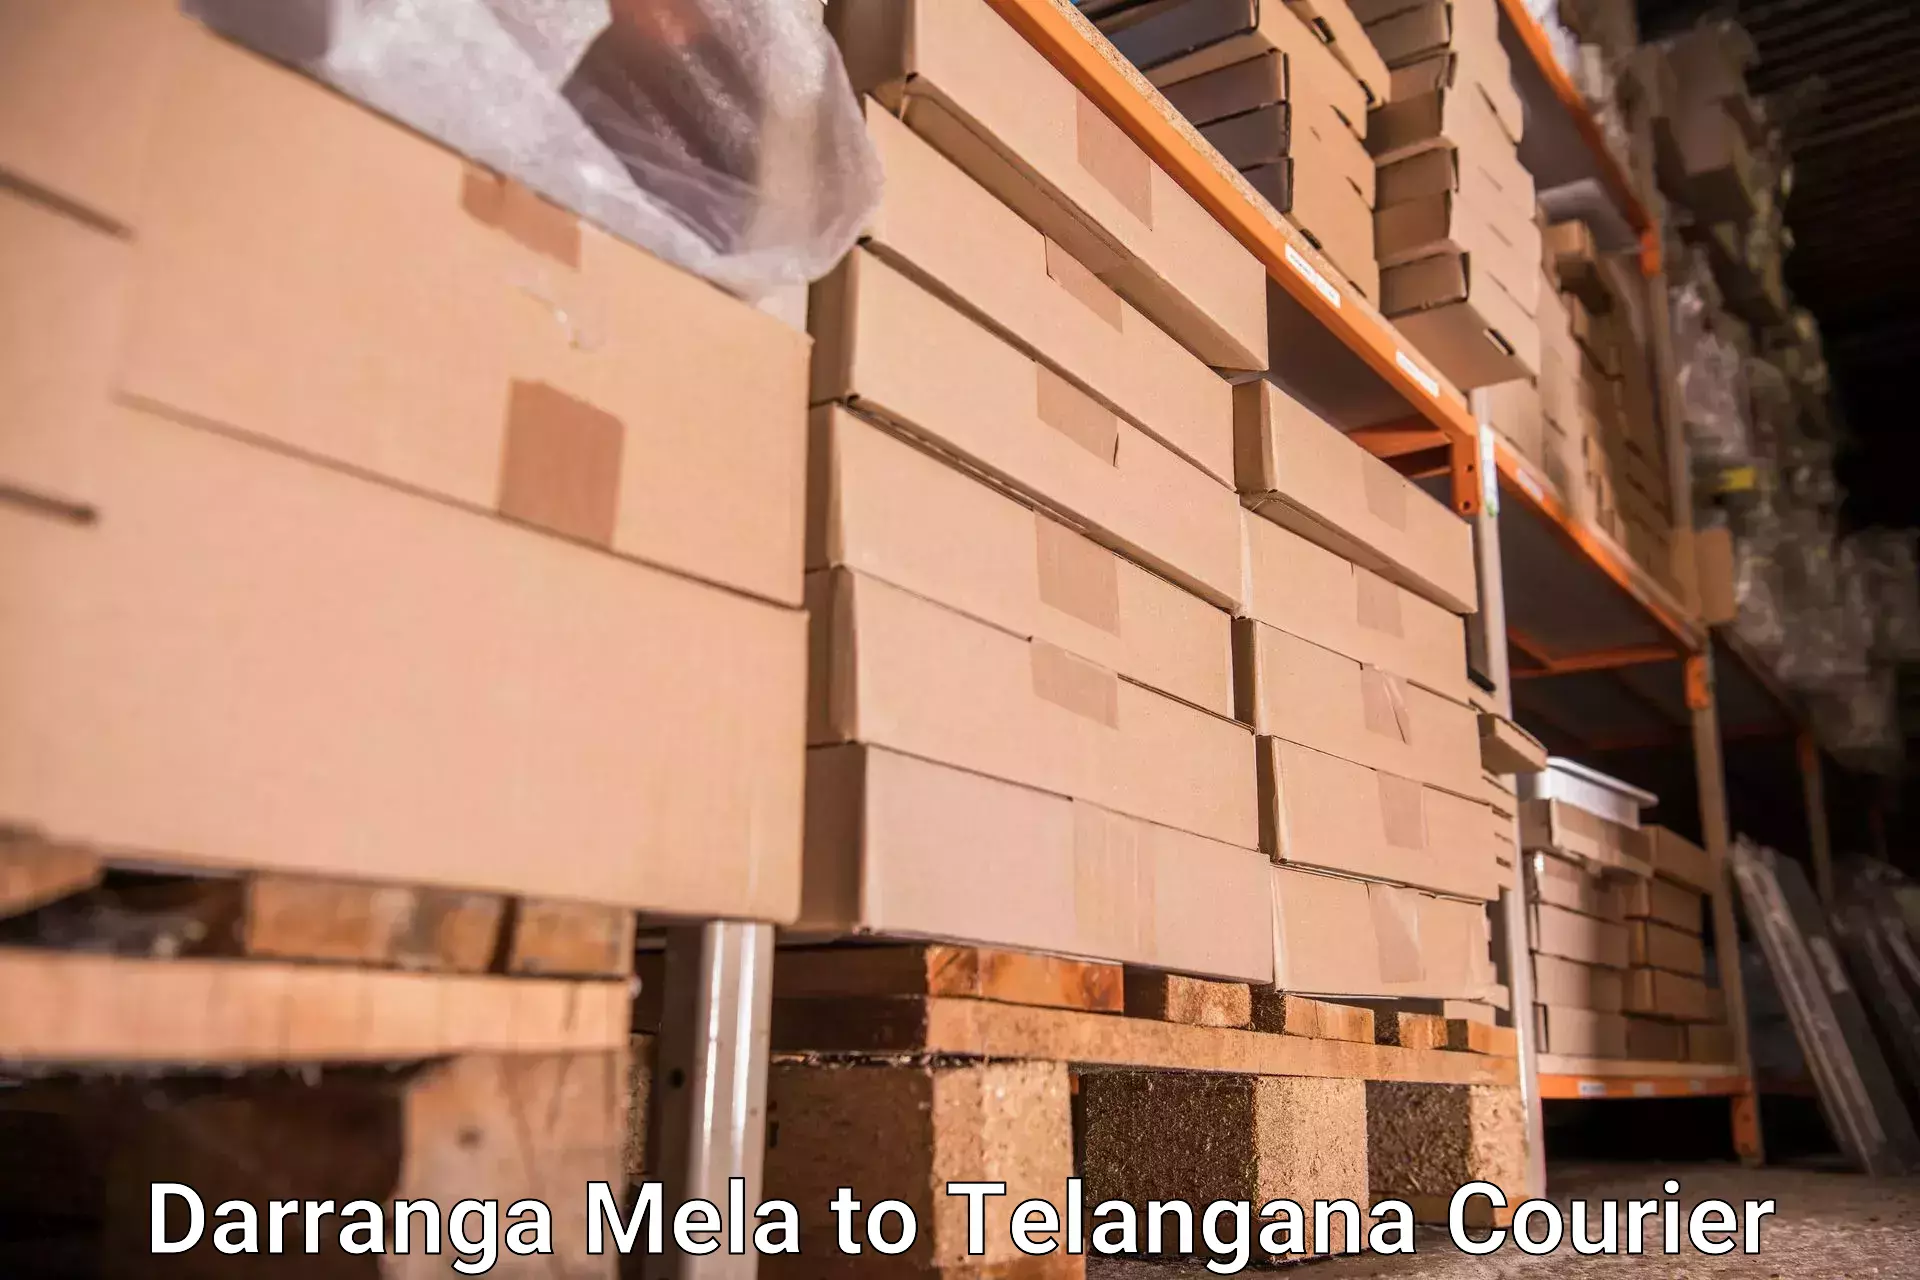 Baggage transport logistics Darranga Mela to Netrang